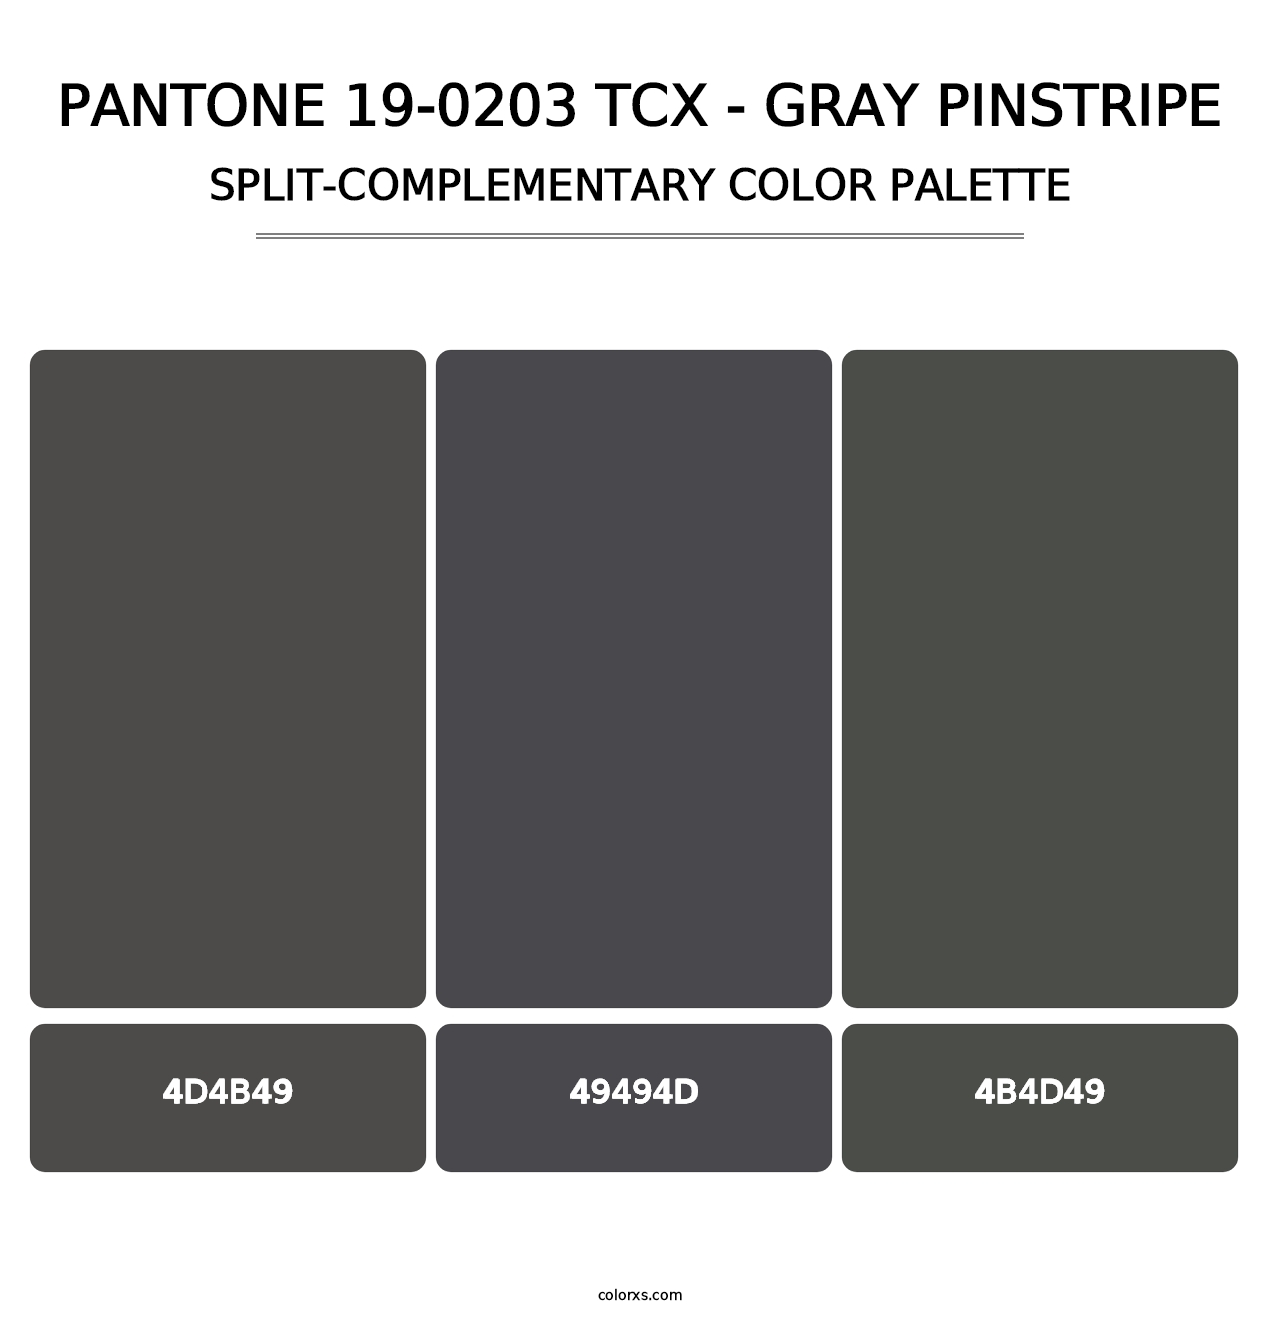 PANTONE 19-0203 TCX - Gray Pinstripe - Split-Complementary Color Palette